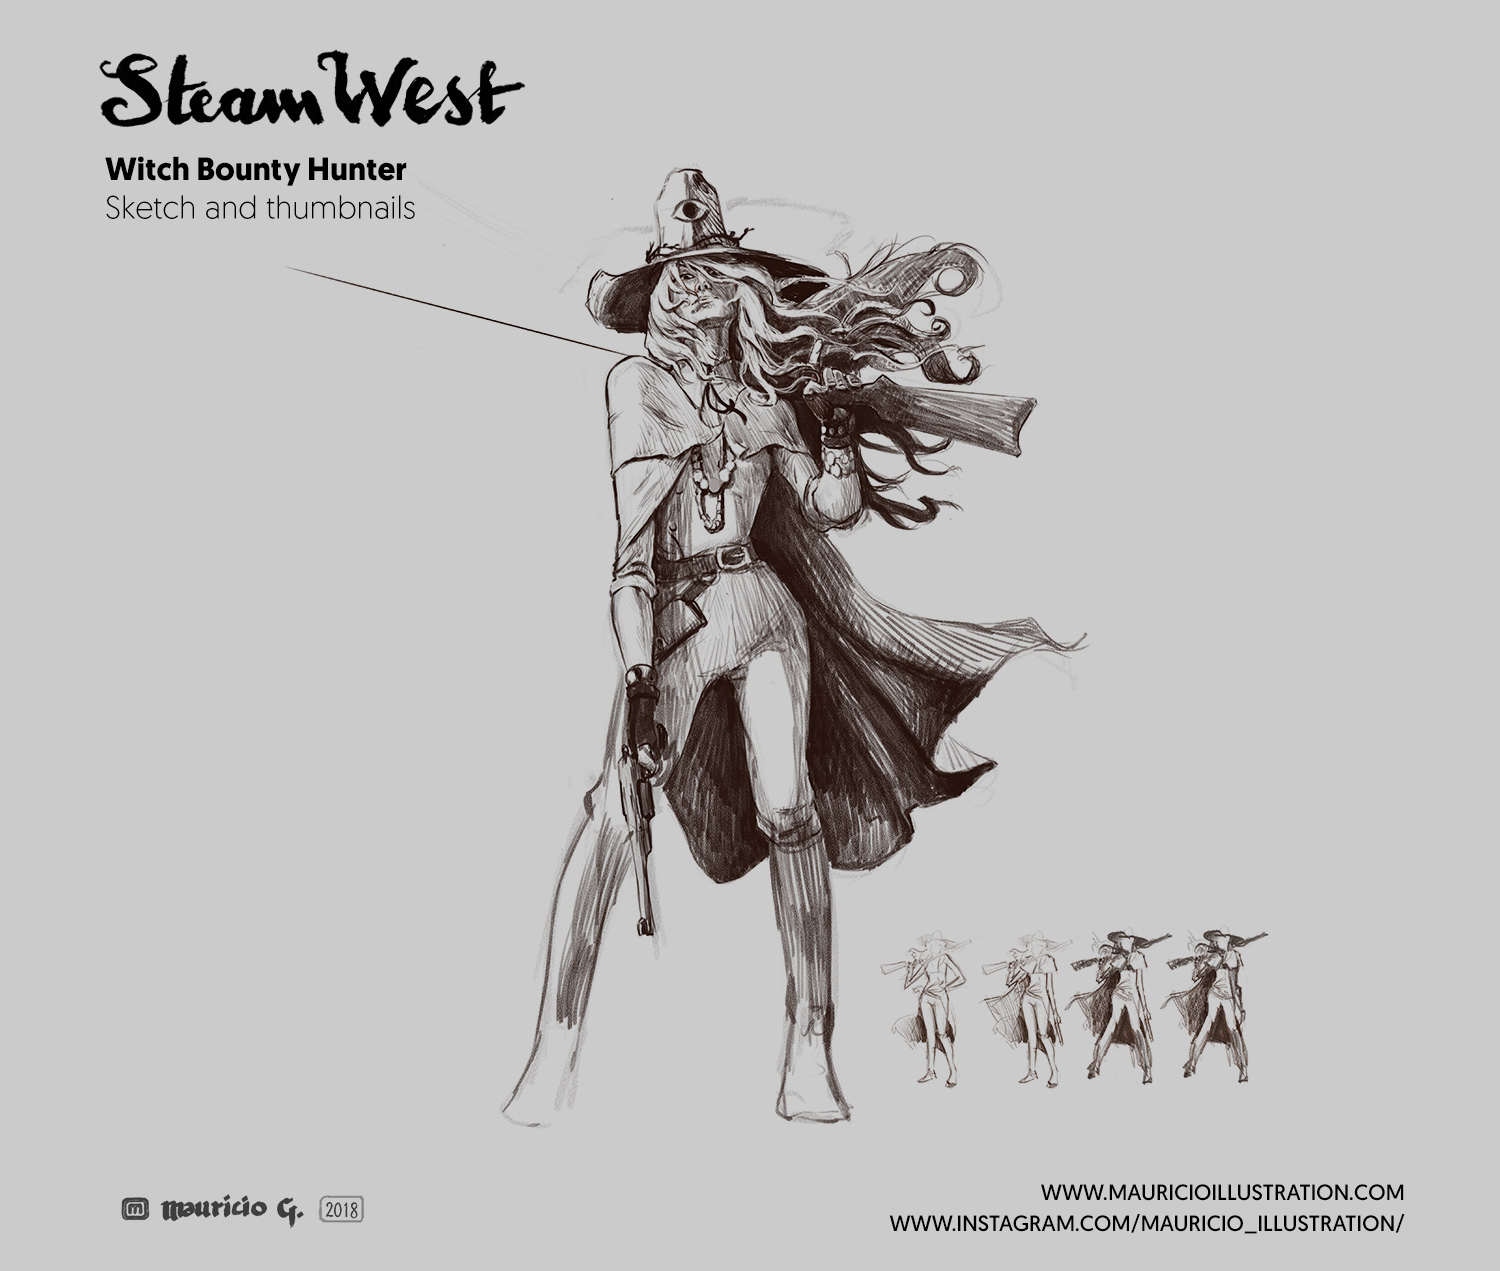 Steam West - Witch bounty Hunter